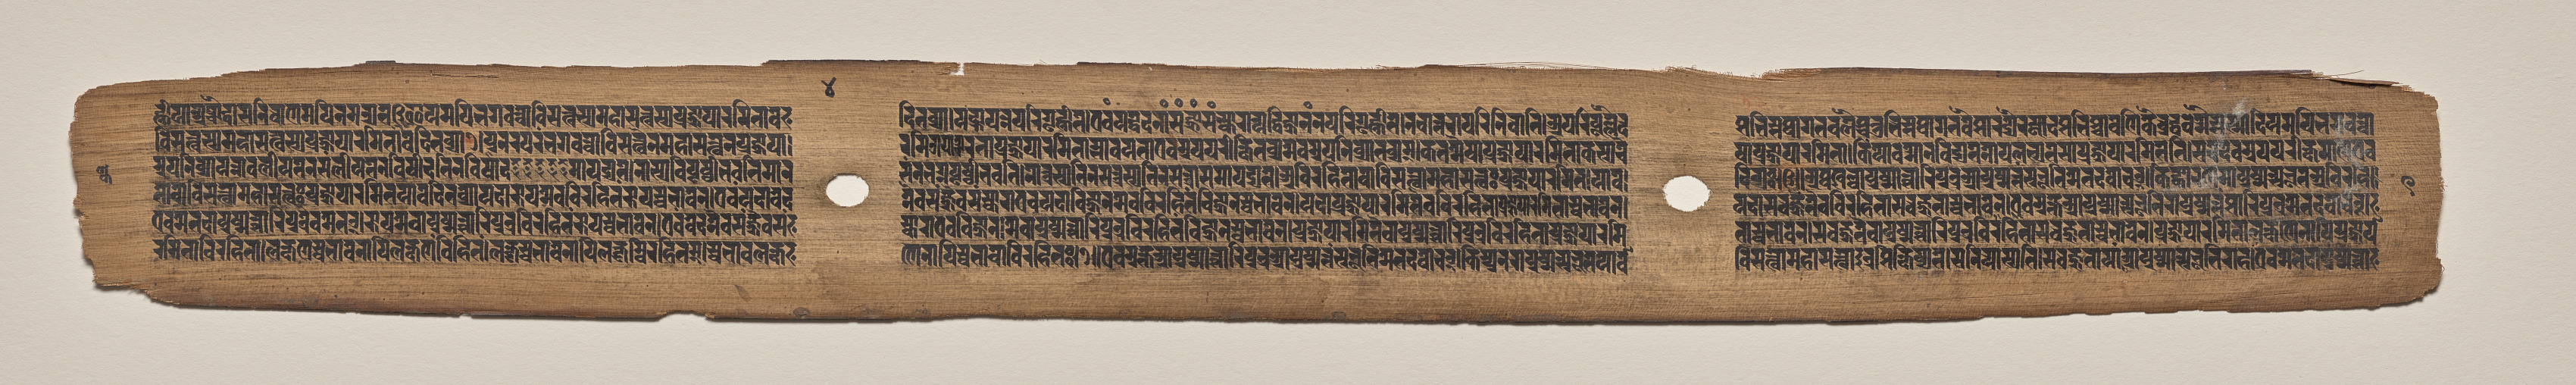 Text, Folio 4 (verso), from a Manuscript of the Perfection of Wisdom in Eight Thousand Lines (Ashtasahasrika Prajnaparamita-sutra)